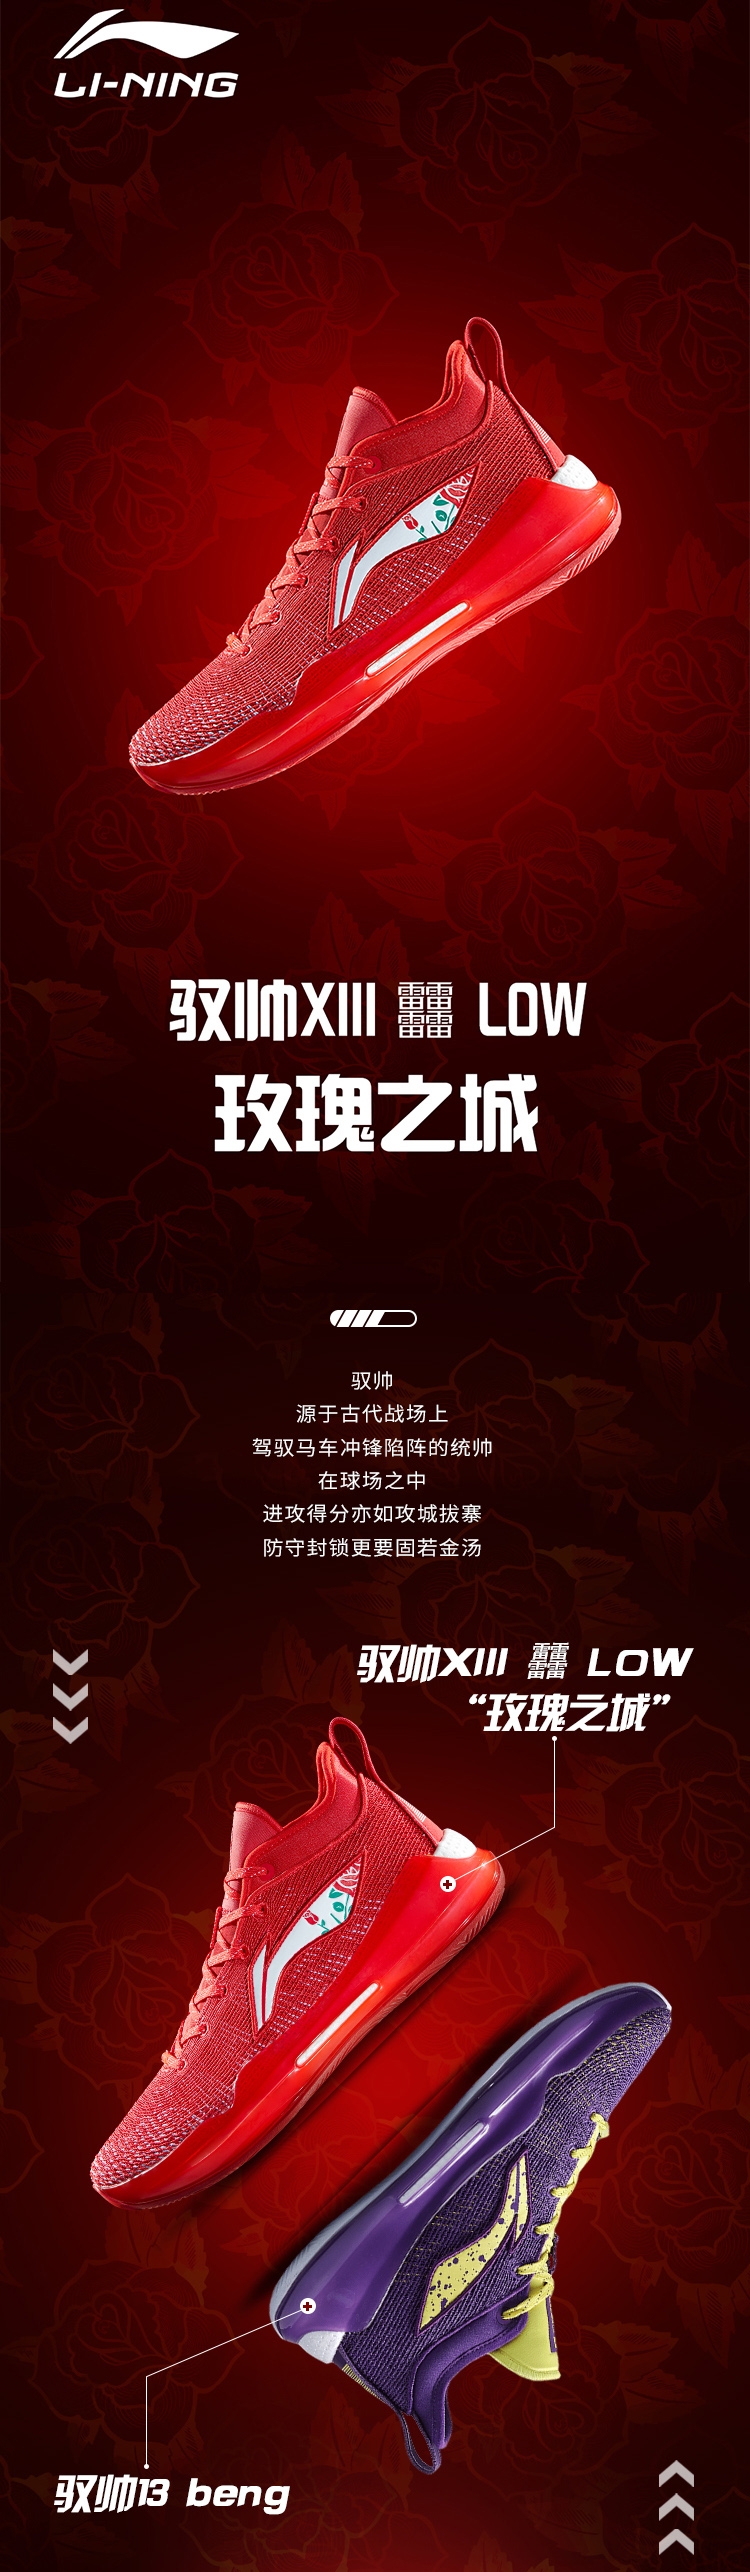 Li-Ning 2020 YUSHUAI XIII Low "Rose City 玫瑰之城" Men's Professional Basketball Game Sneakers